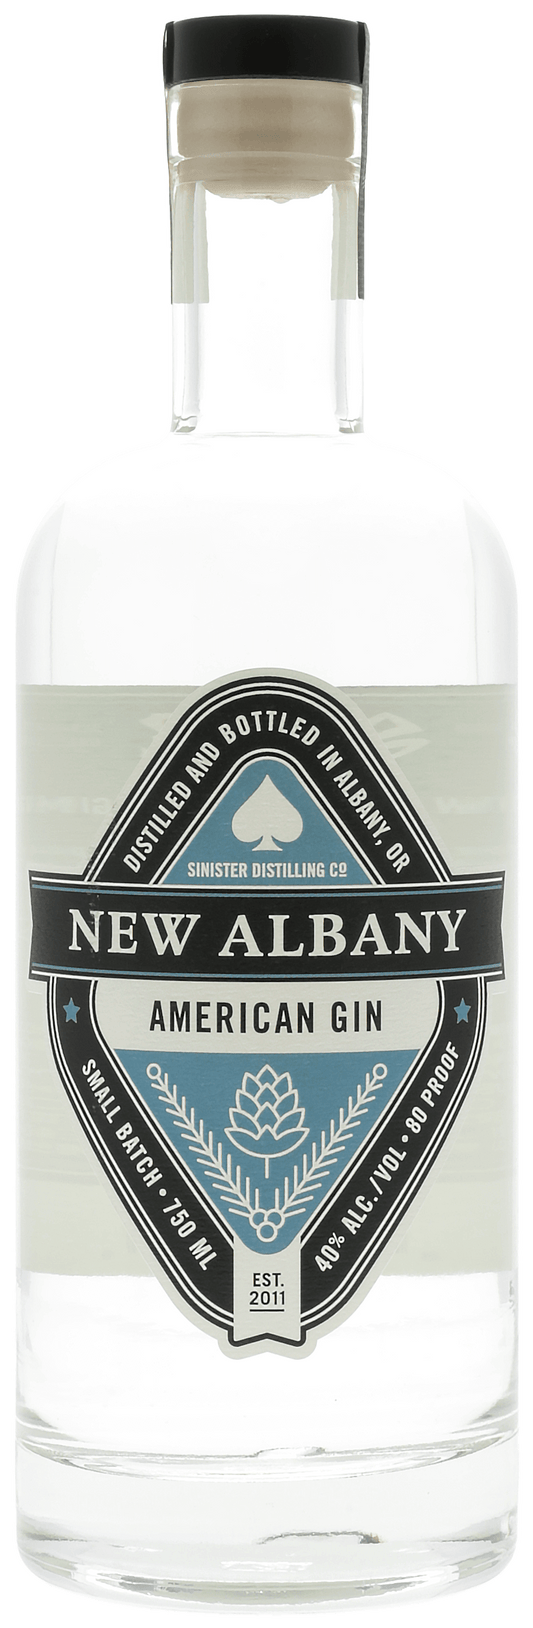 New Albany Gin